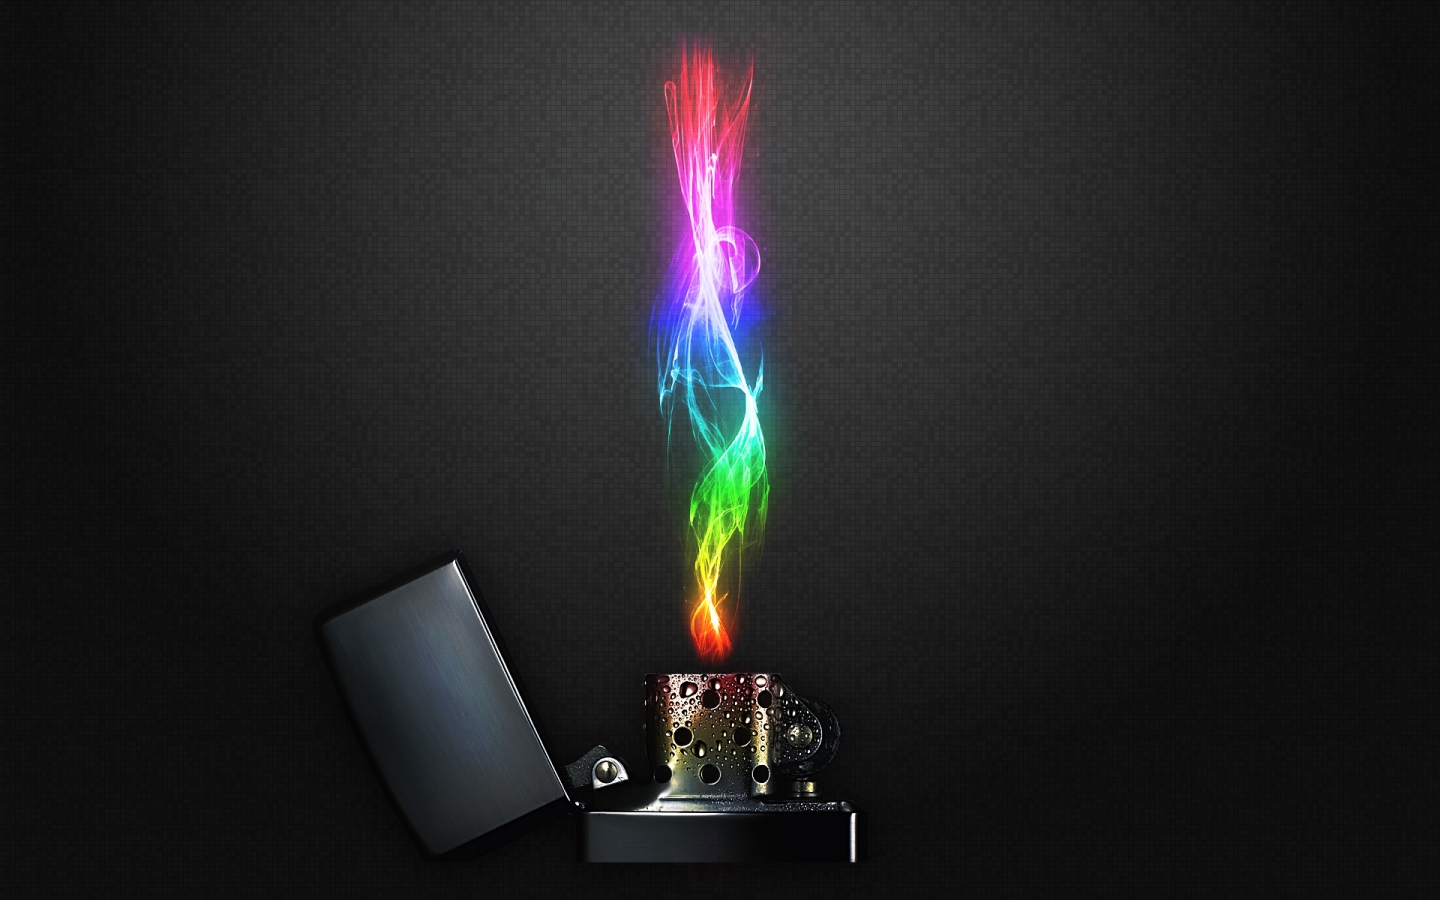 Rainbow Lighter for 1440 x 900 widescreen resolution